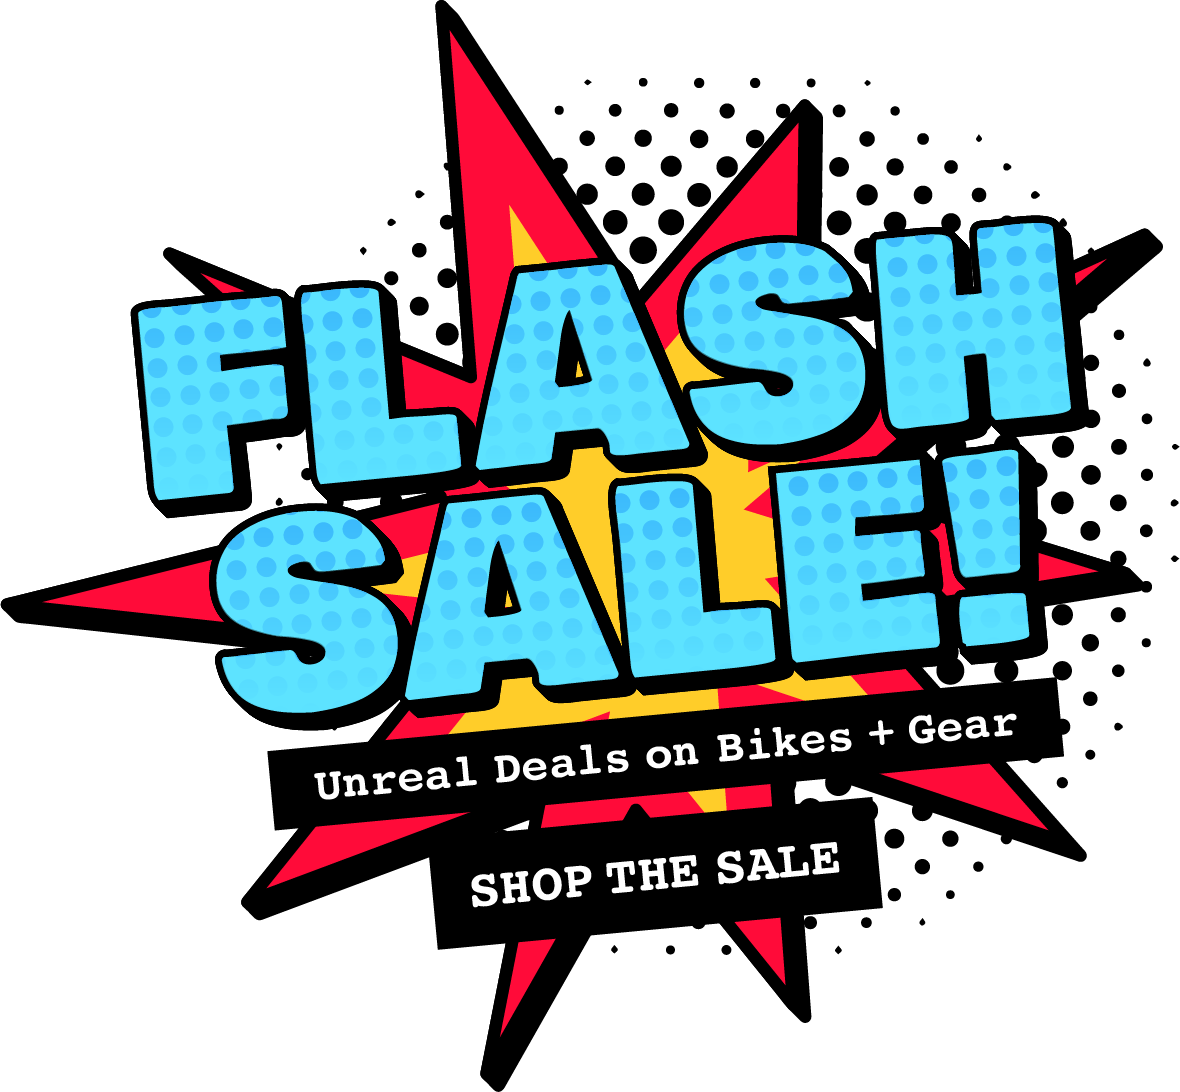 Flash Sale! Unreal Deals on Bikes + Gear